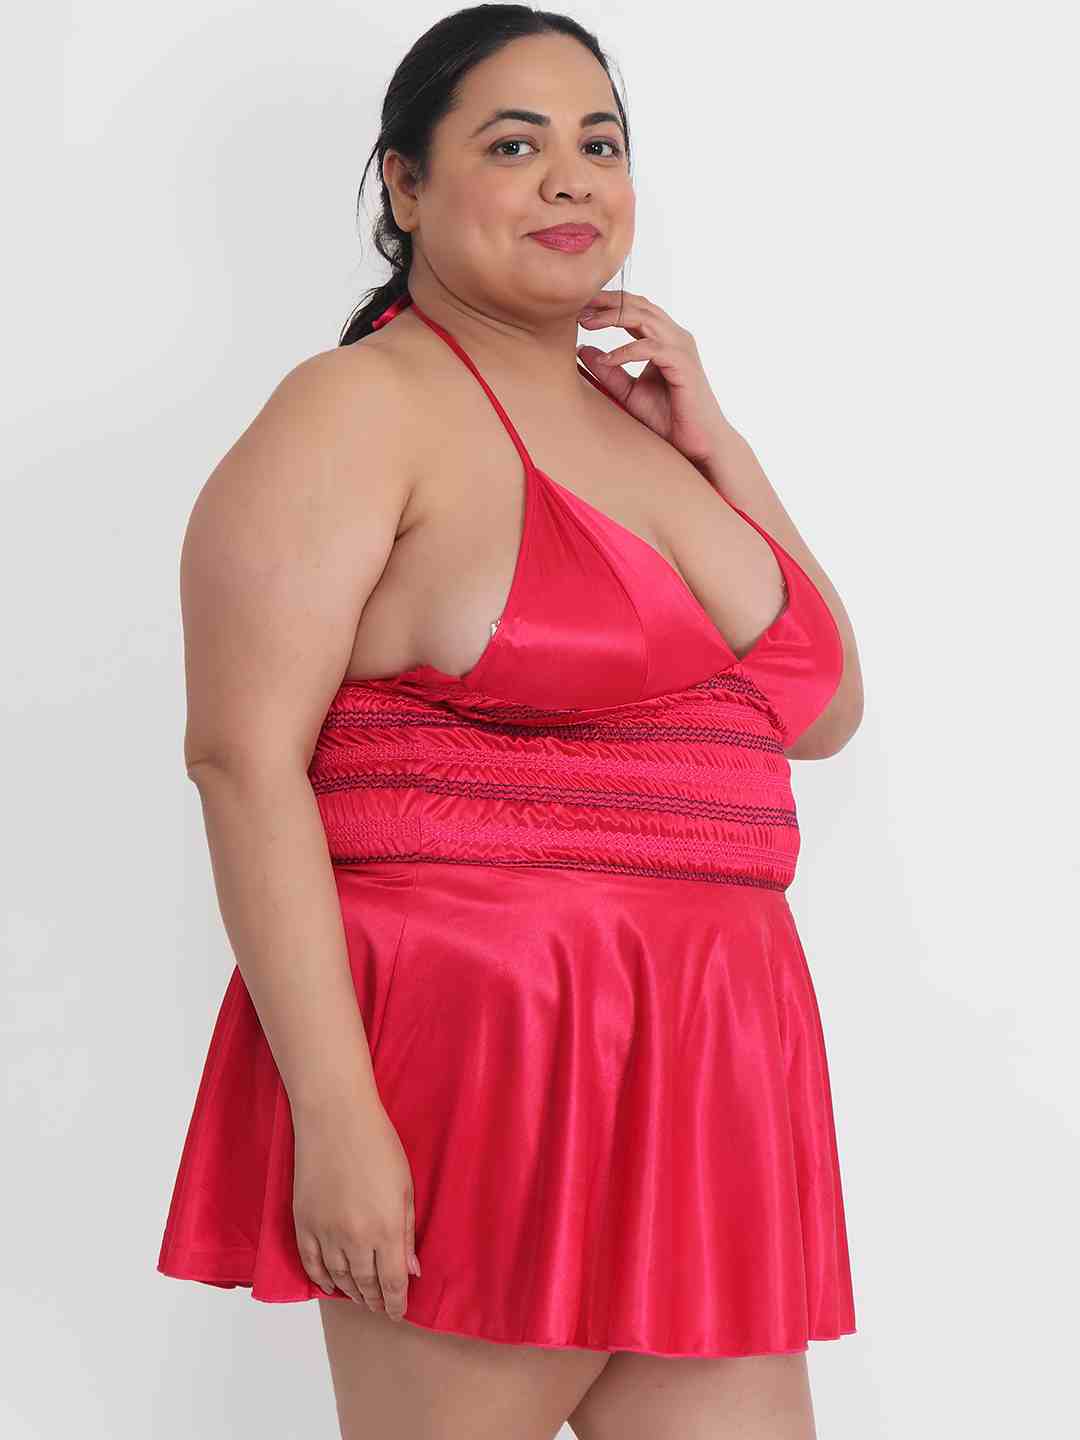 Plus Size Babydoll Bikini Dress For Honeymoon Bb40gb at Rs 999.00